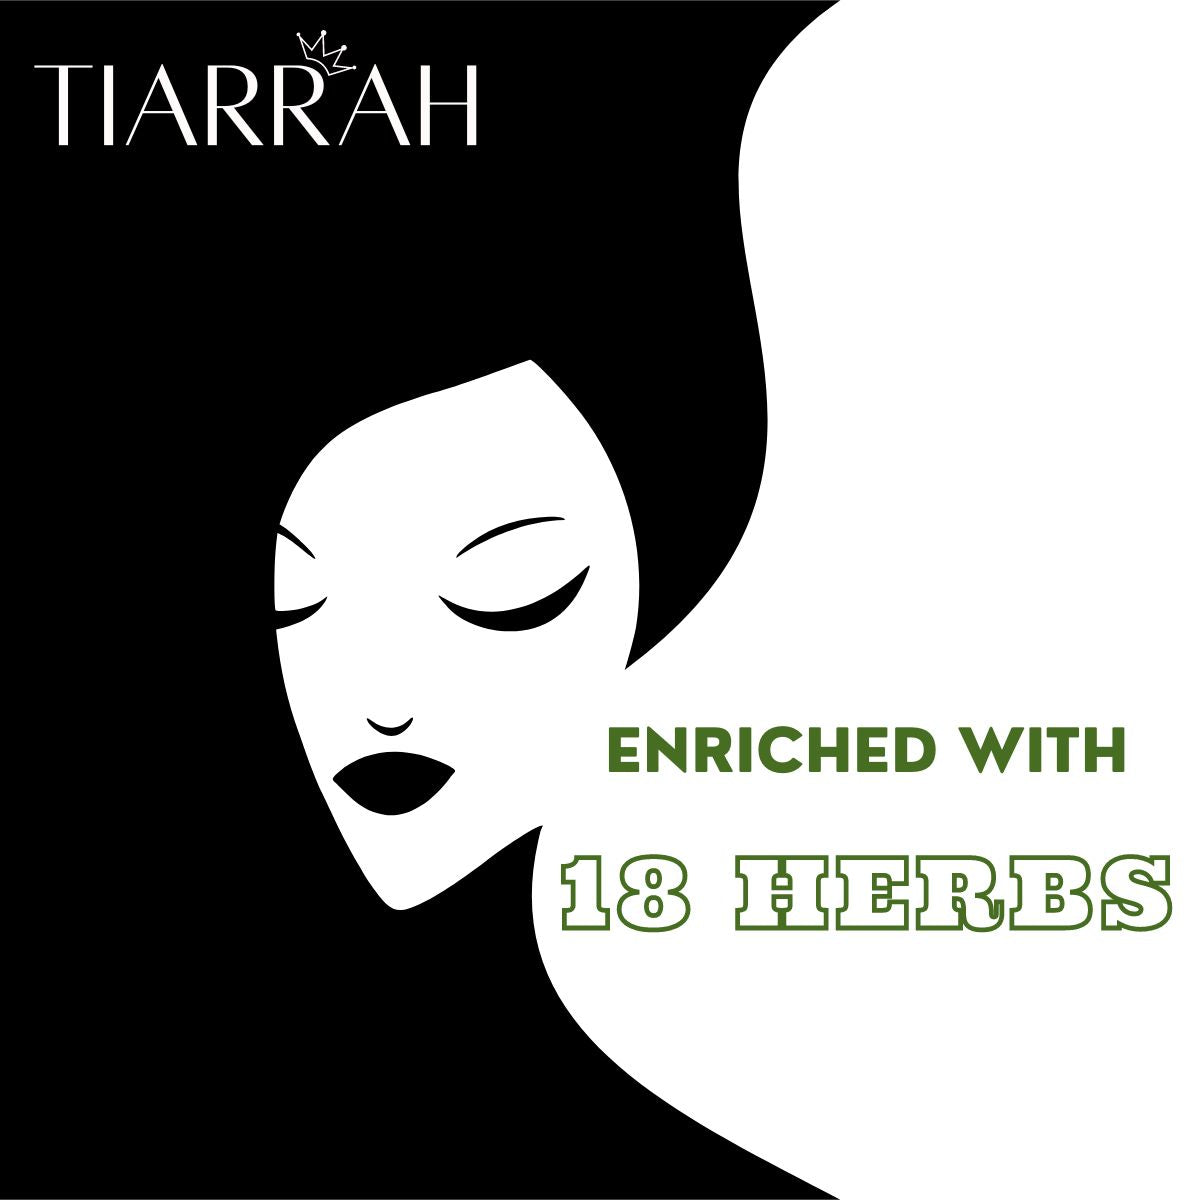 Tiarrah's Hair Oil: Natural, Organic, Non-Toxic, 18 Herbs - The Luxury Bath and Body Care Shop